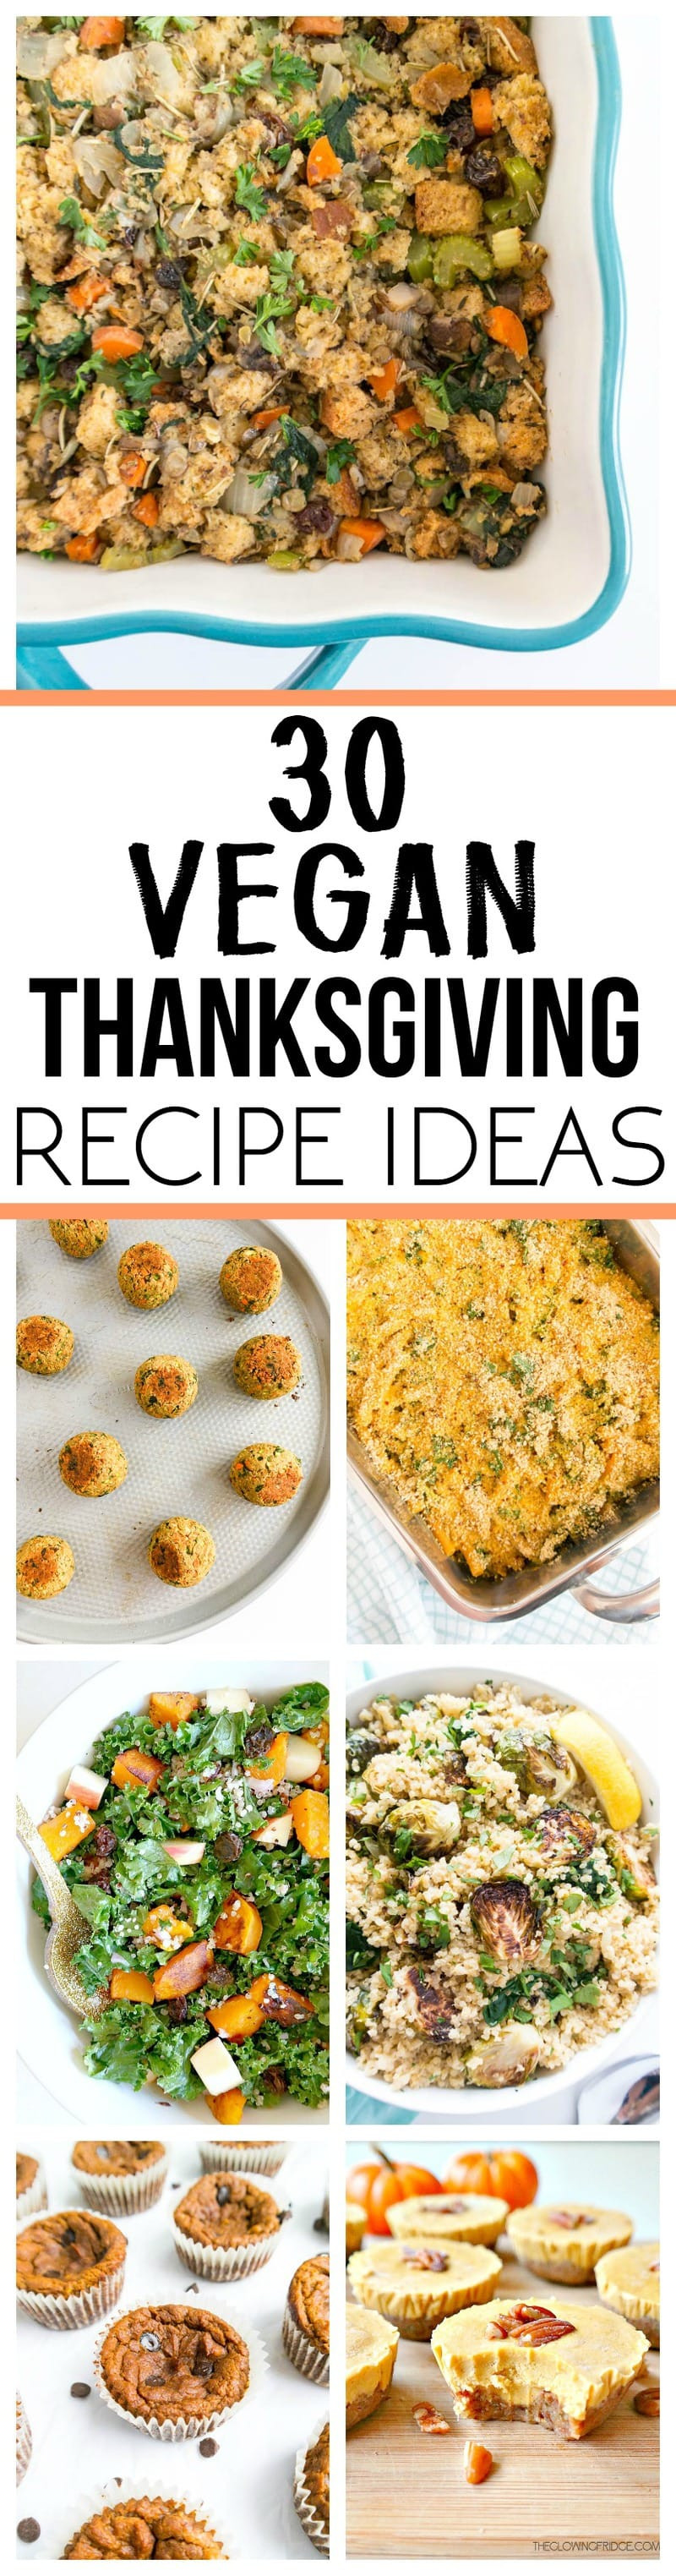 Vegan Thanksgiving Ideas
 30 Vegan Thanksgiving Recipe Ideas The Glowing Fridge